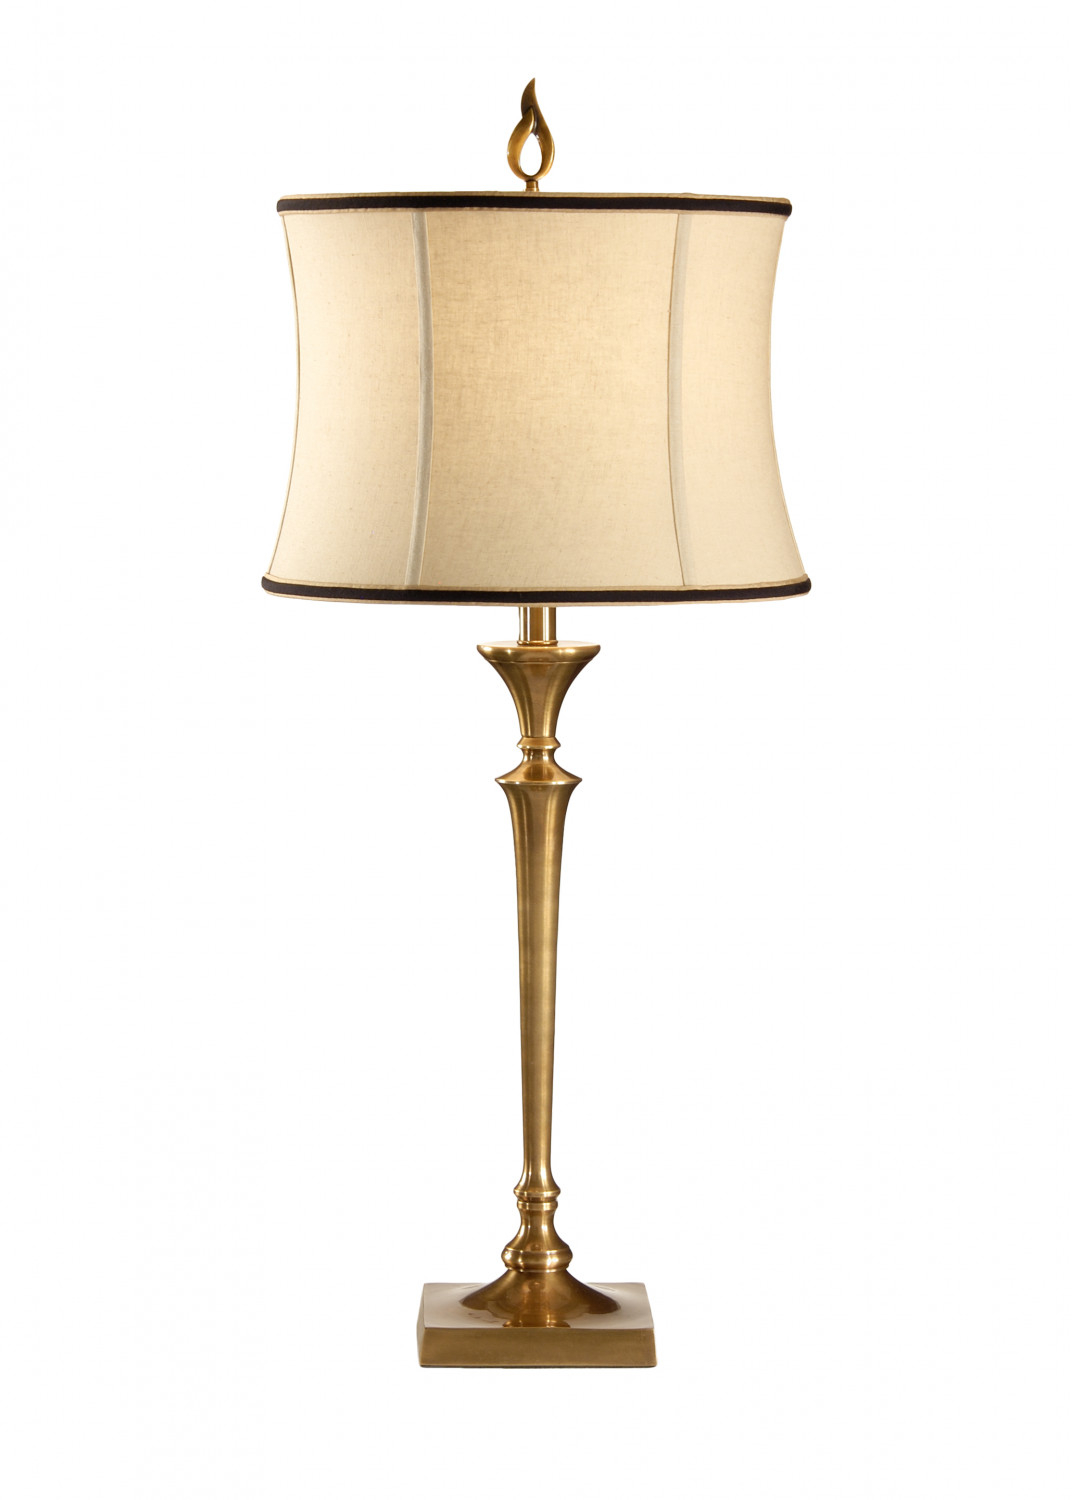 Brass candlestick lamps